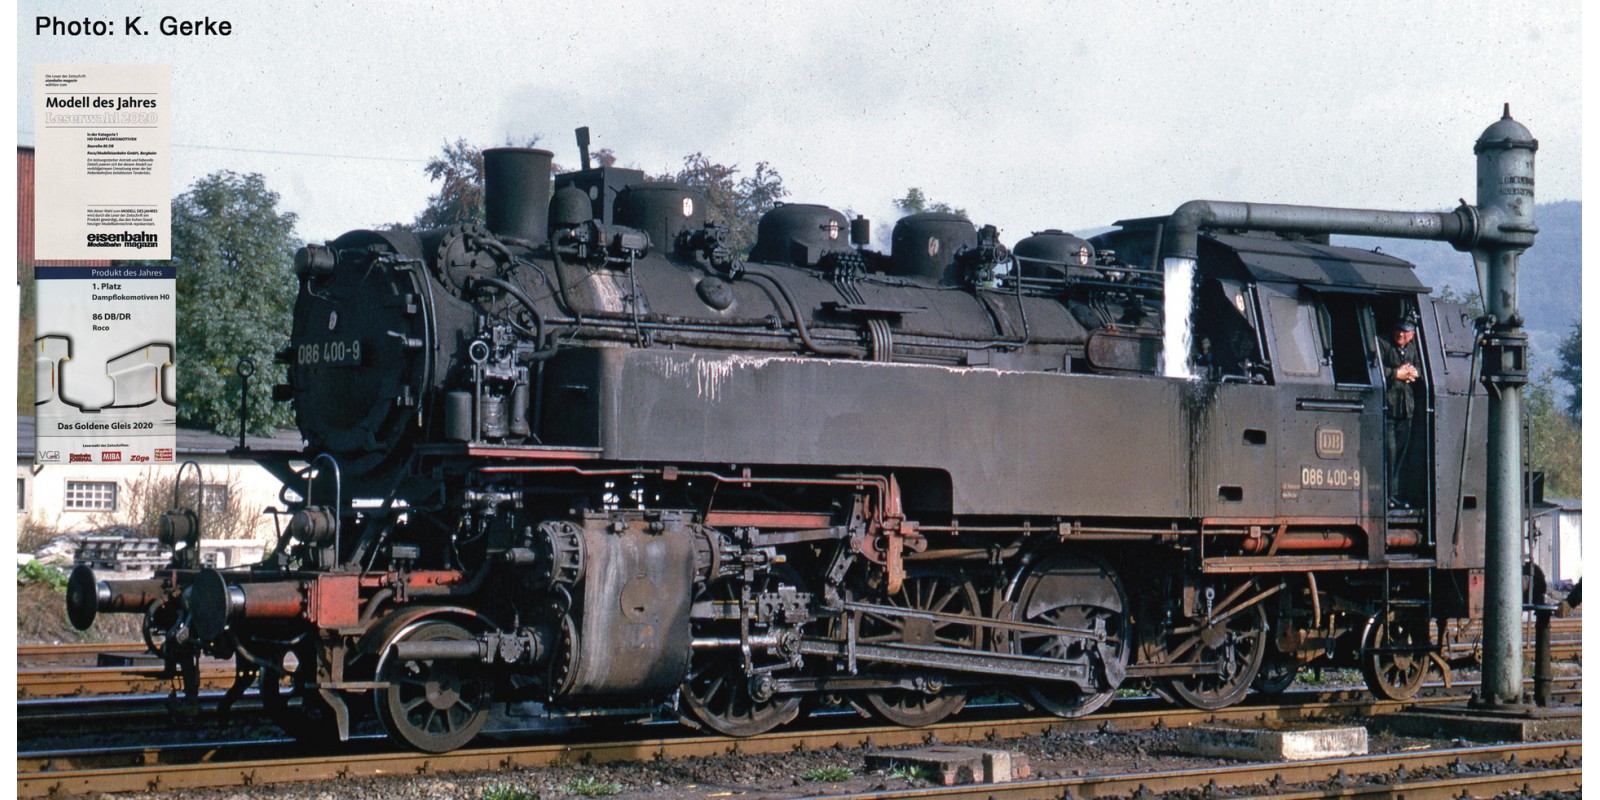 RO78318 Steam locomotive 086 400-9